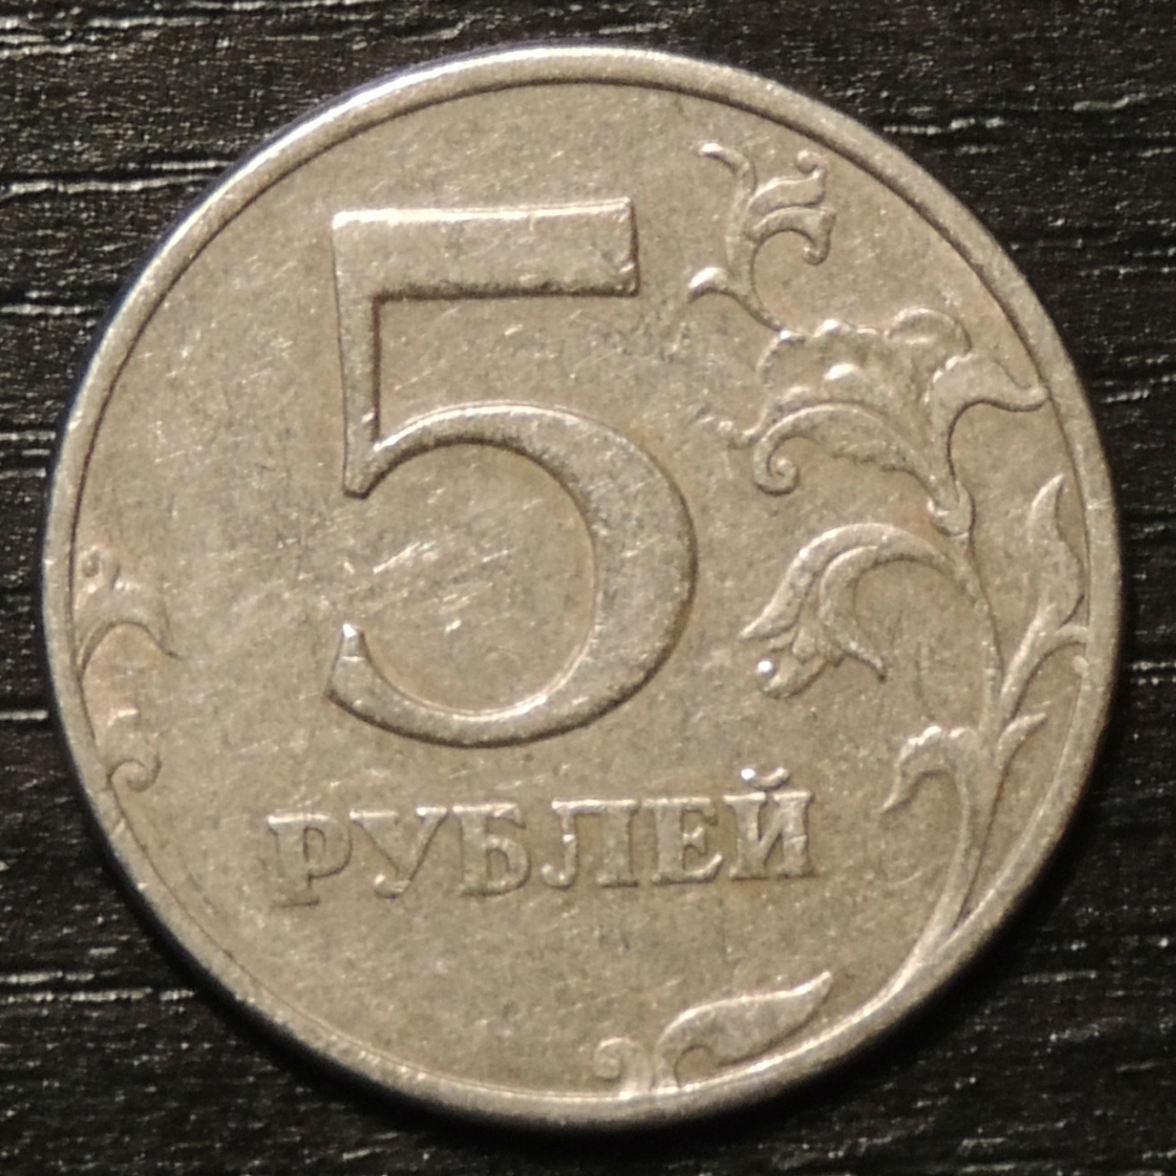 48 5 в рублях. 5 Рублей 1998 СПМД. Пять рублей СПМД 1998. 5 Рублей 1993 года. Монета 5 рублей.